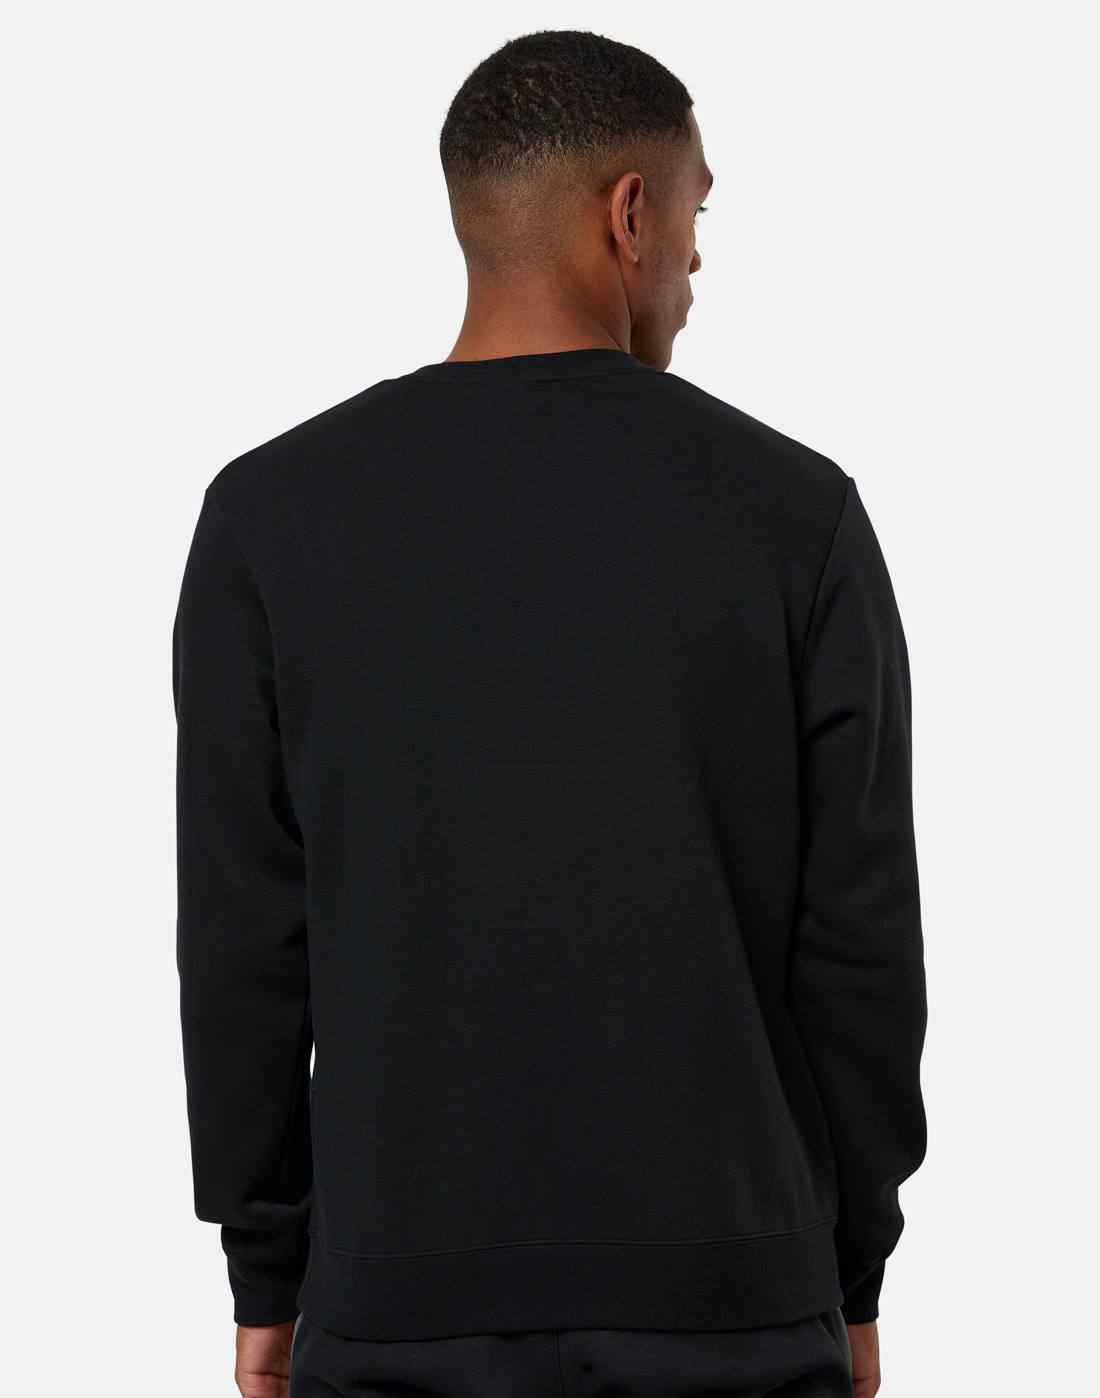 Nike Mens Sports Fleece Crew Neck Sweatshirt - Black | Life Style Sports IE